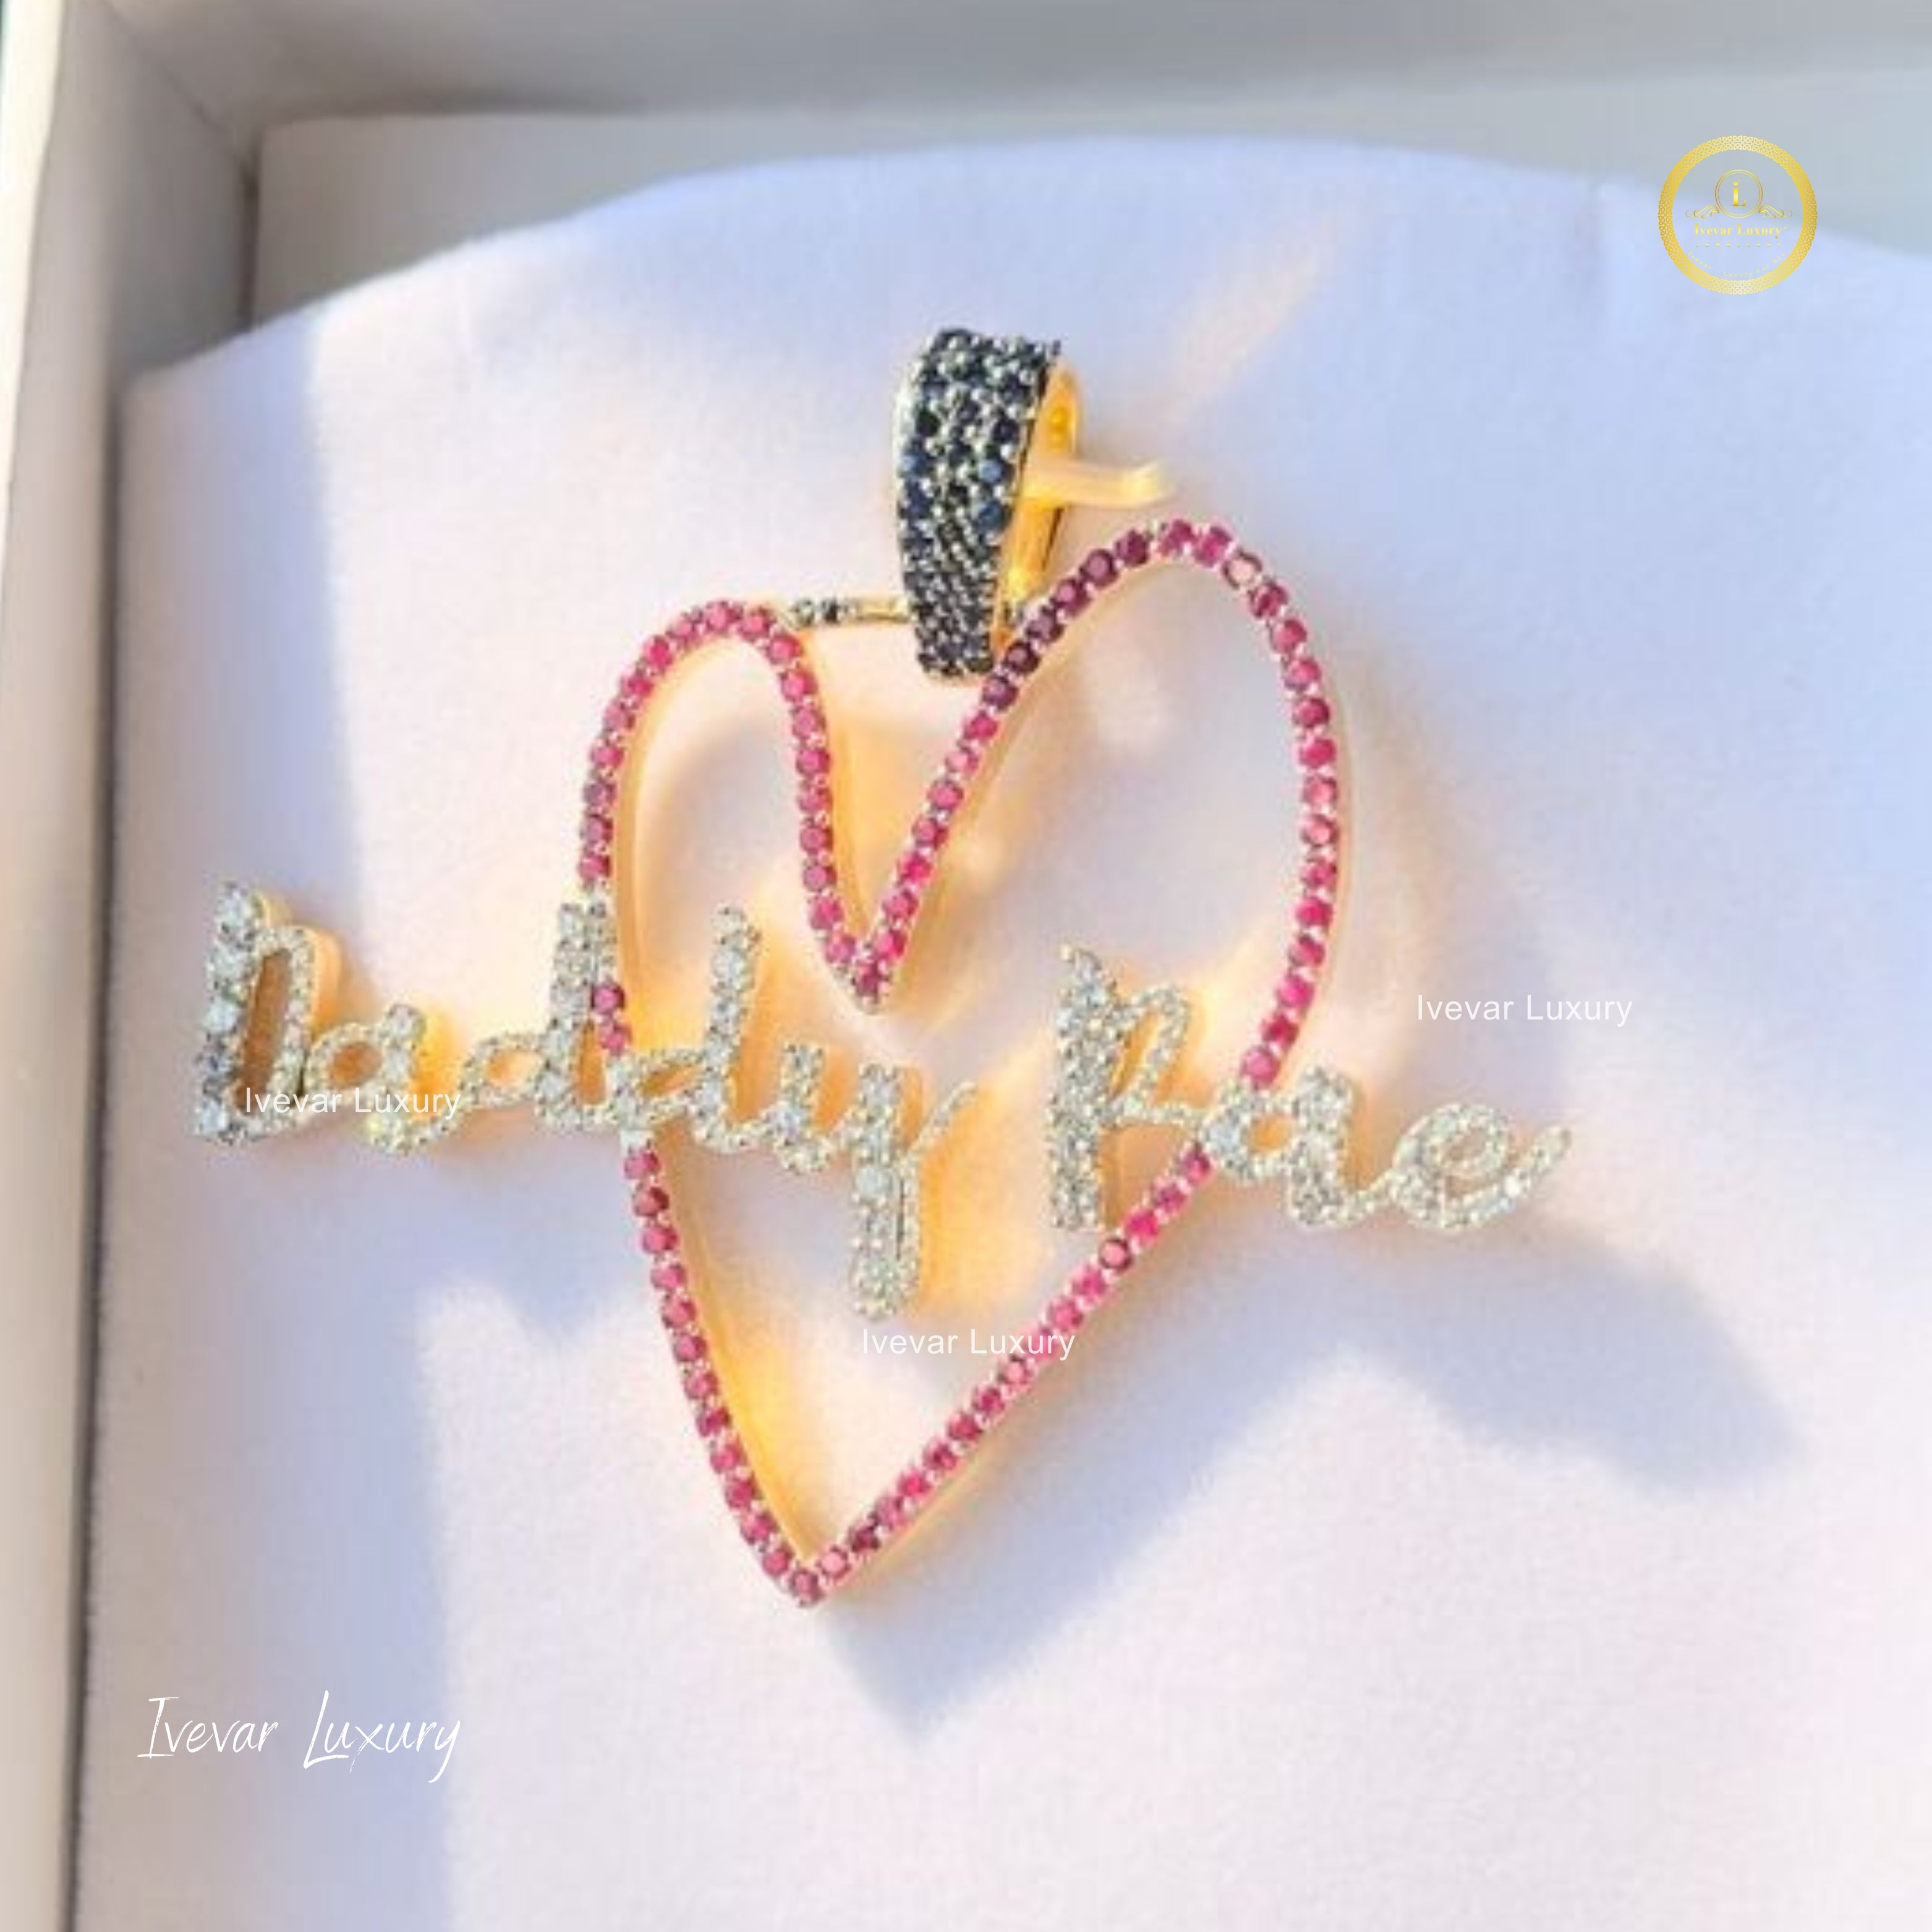 Ivevar Best Quality Custom, Gift For Him / Her , Real Diamond custom pendant, , Customize any Letters